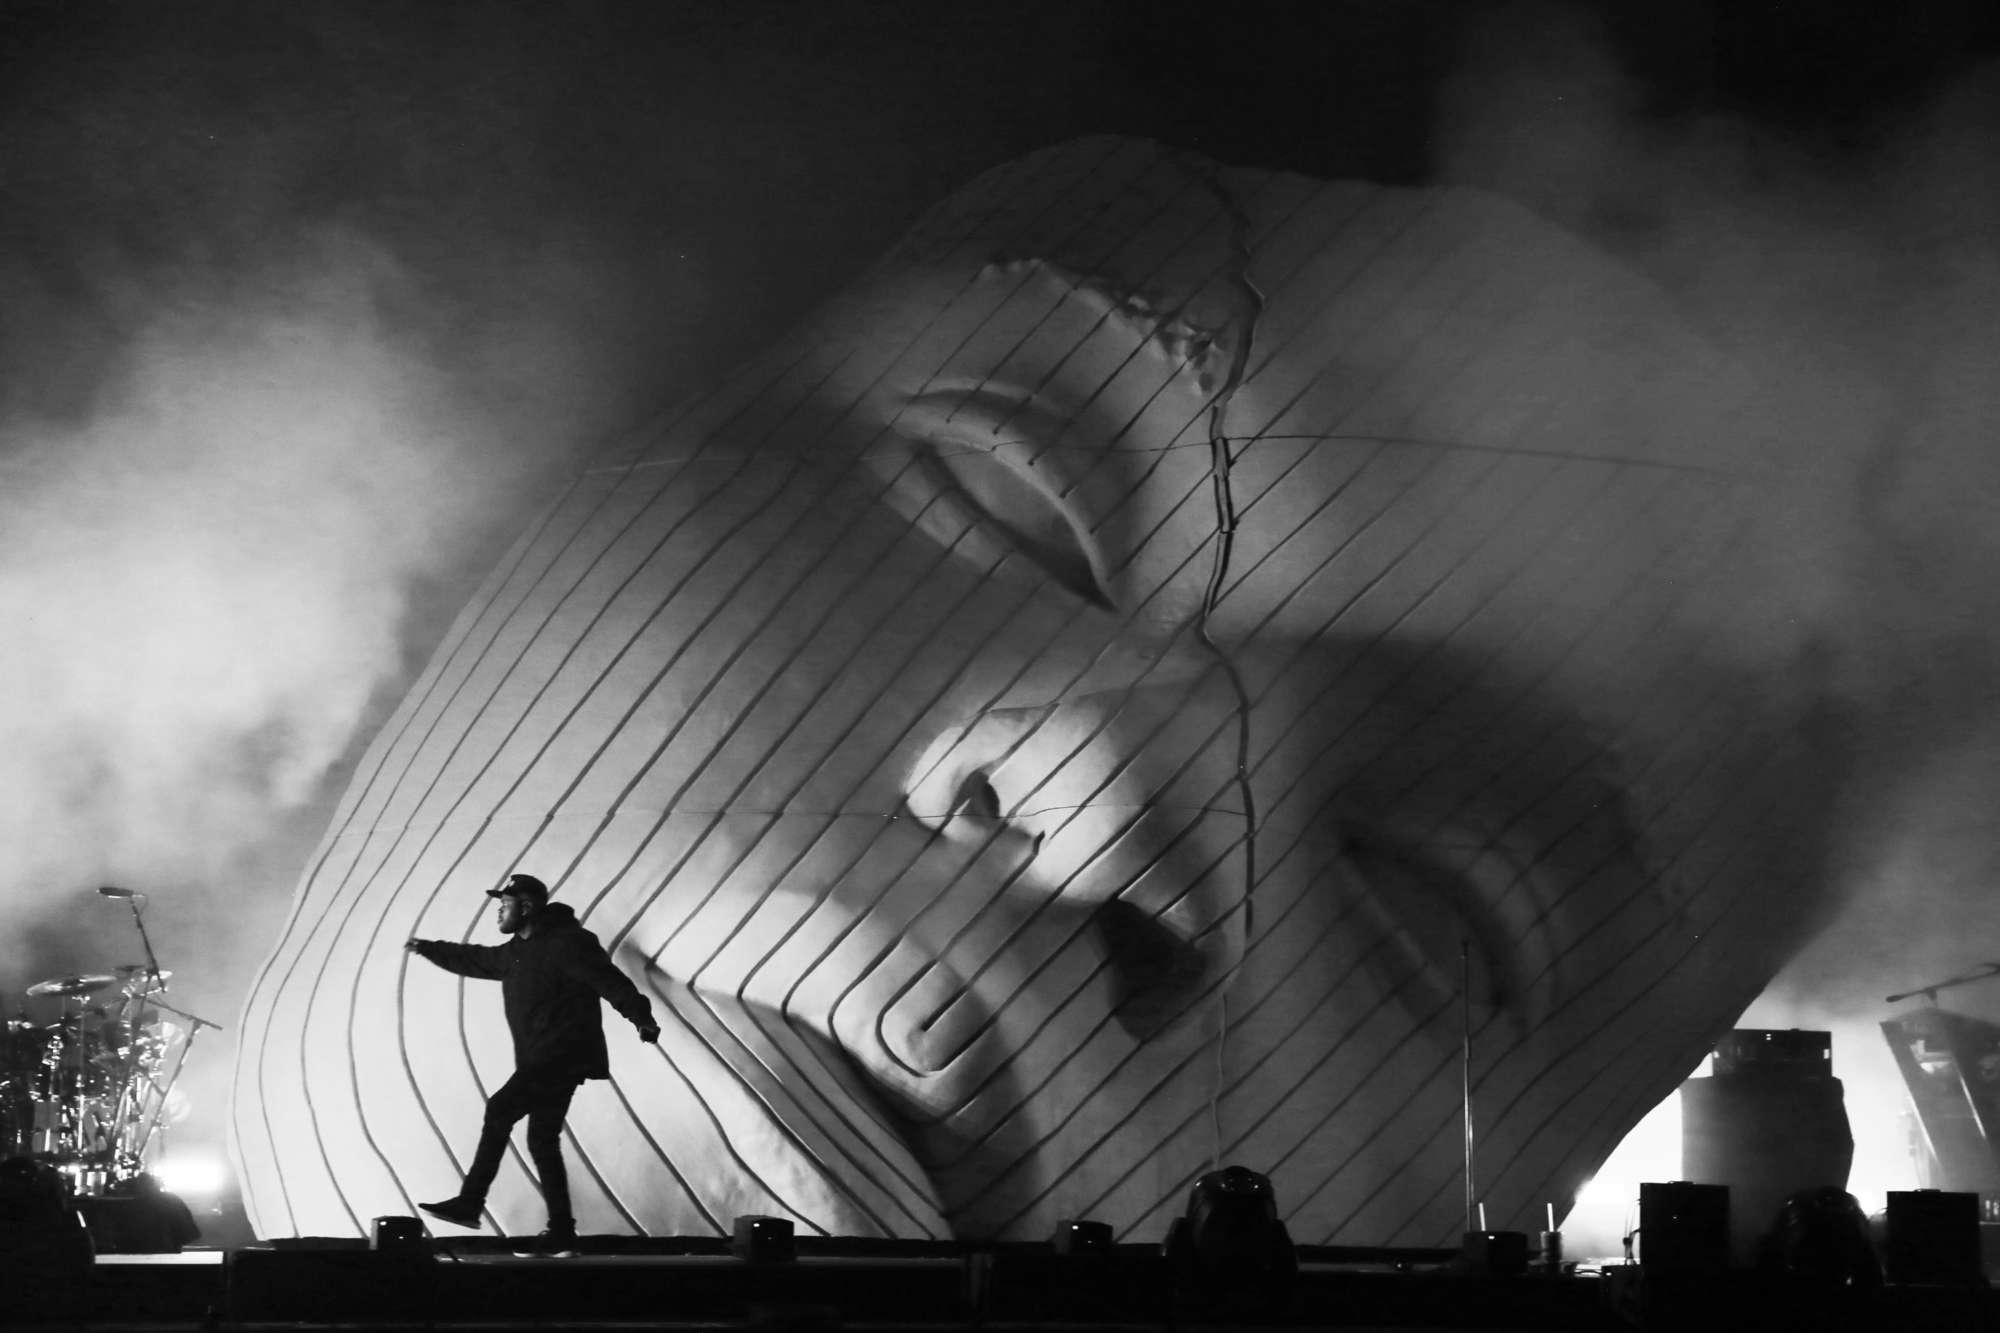 Es Devlin (@esdevlin) on Instagram: “Projection mapped portrait sculpture :  The Weeknd at Coachella”